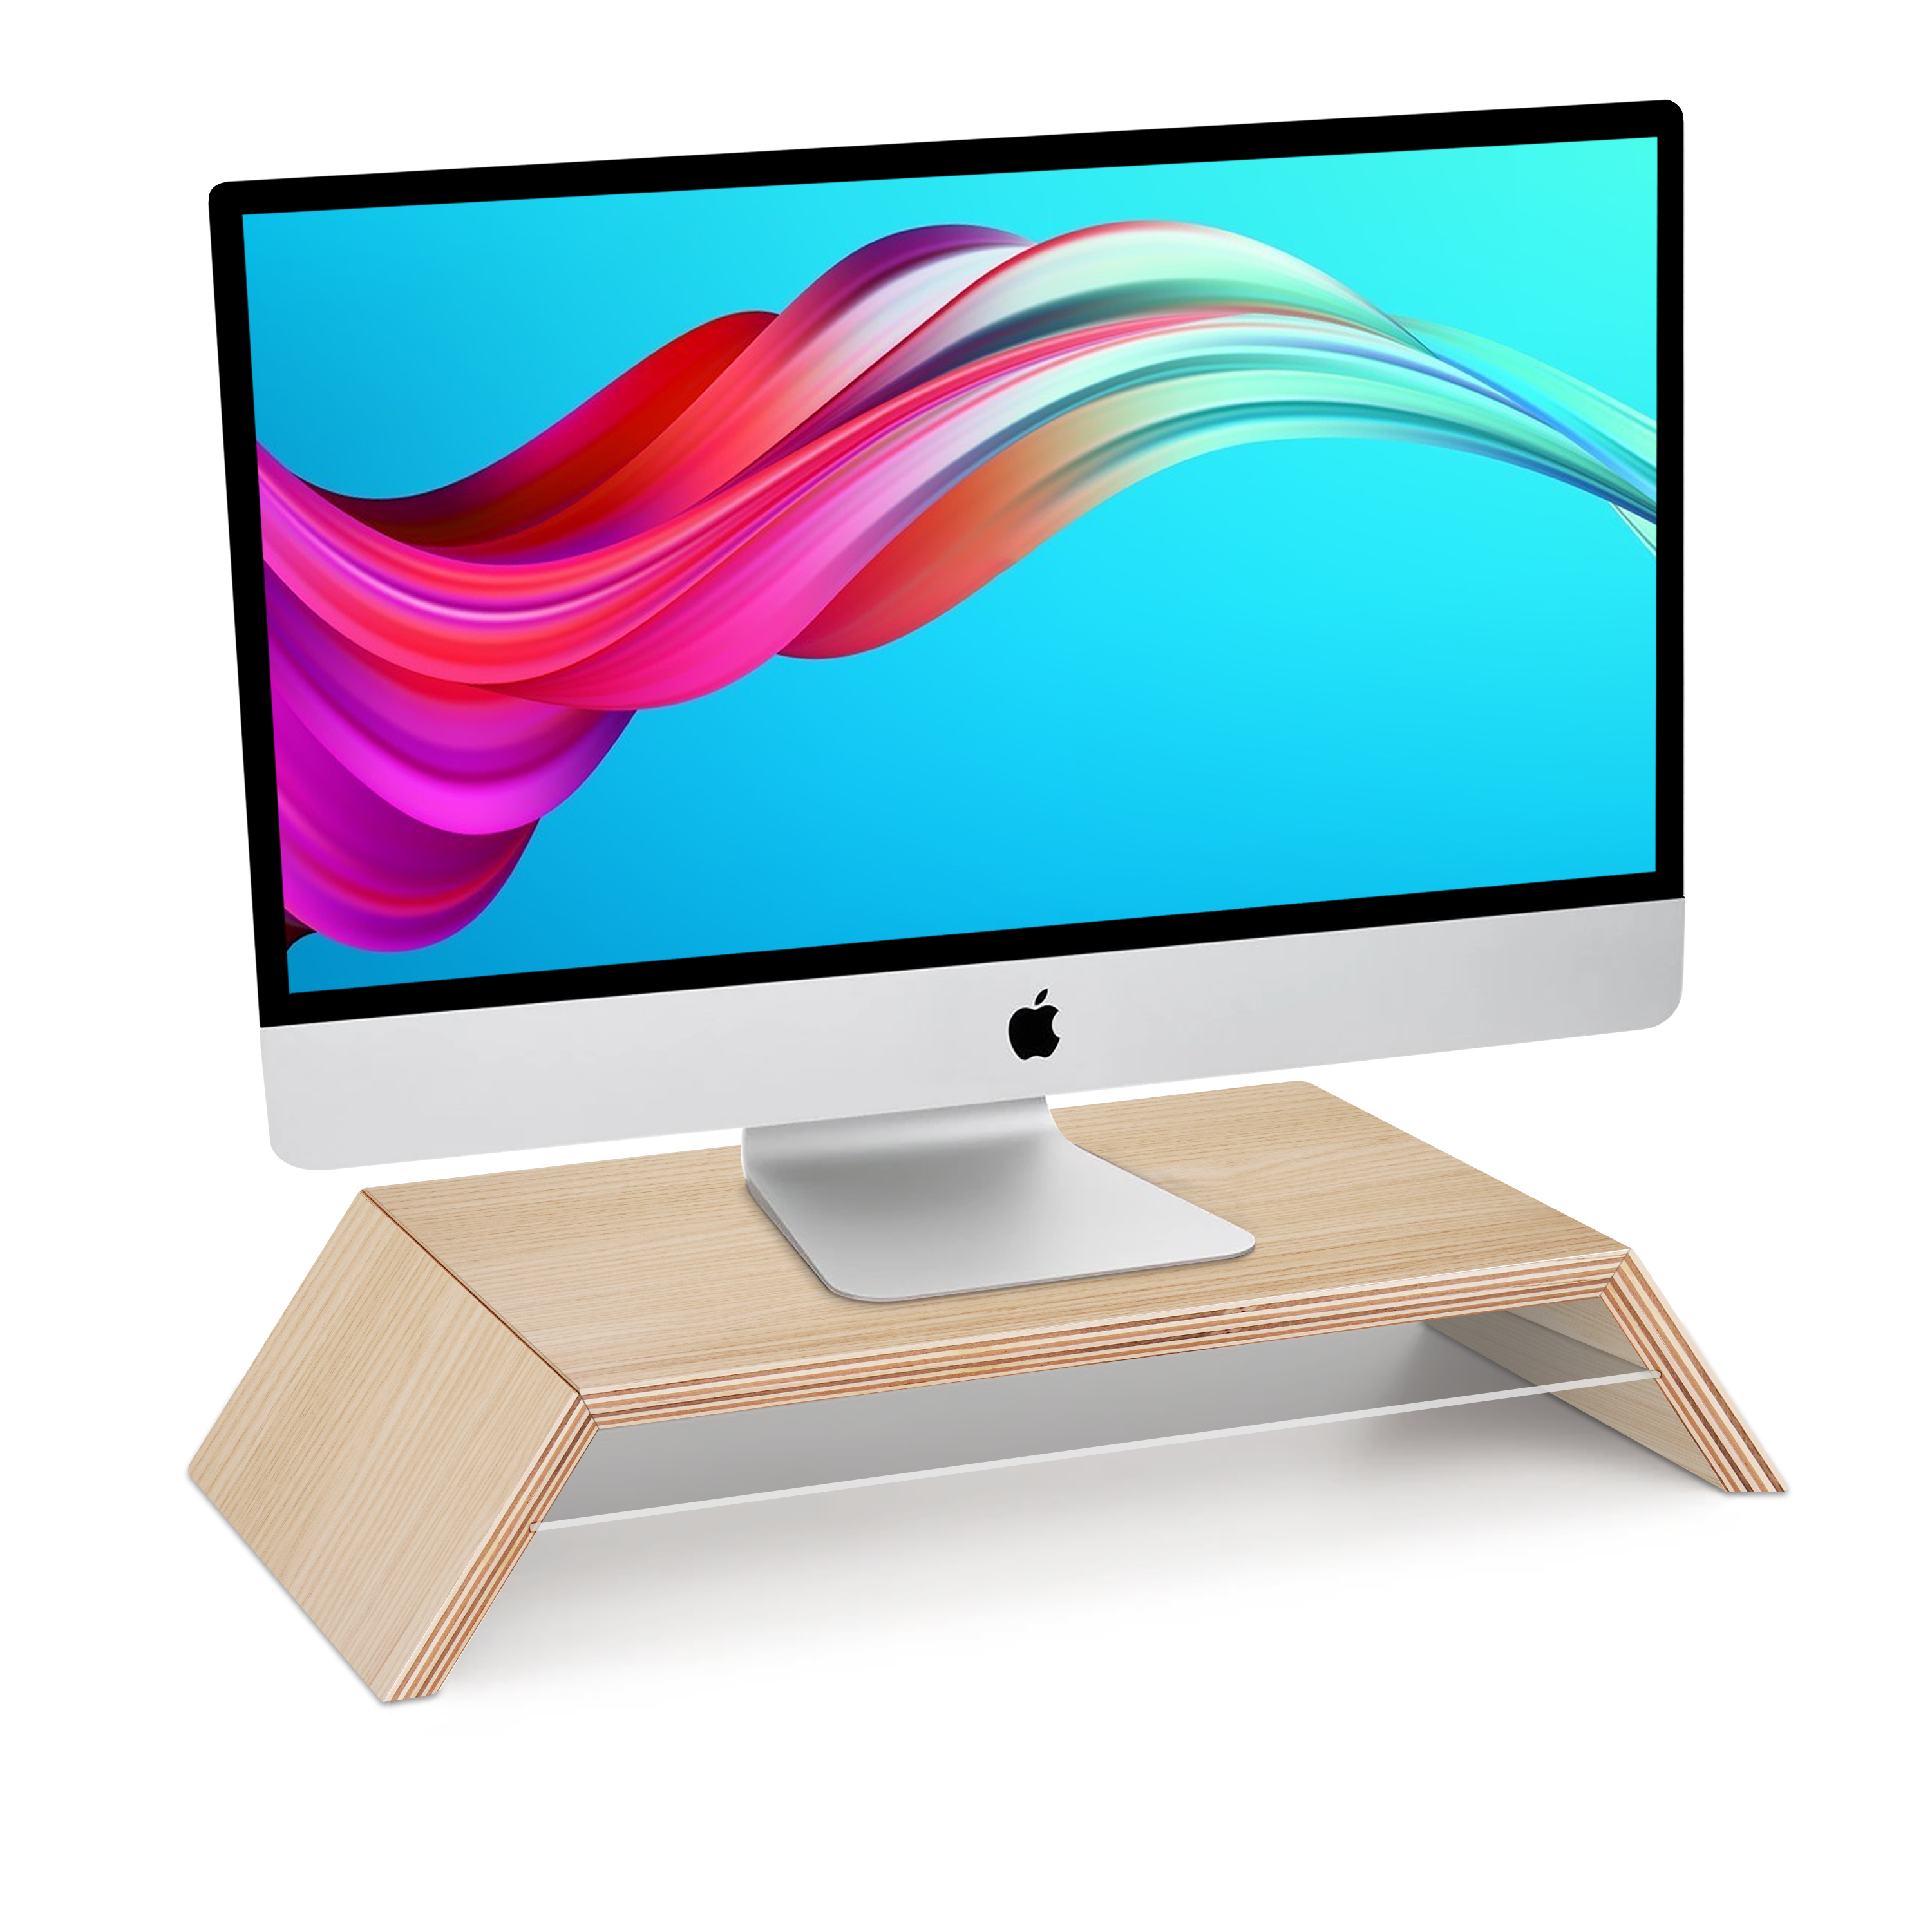 Aothia wooden desktop monitor stand riser